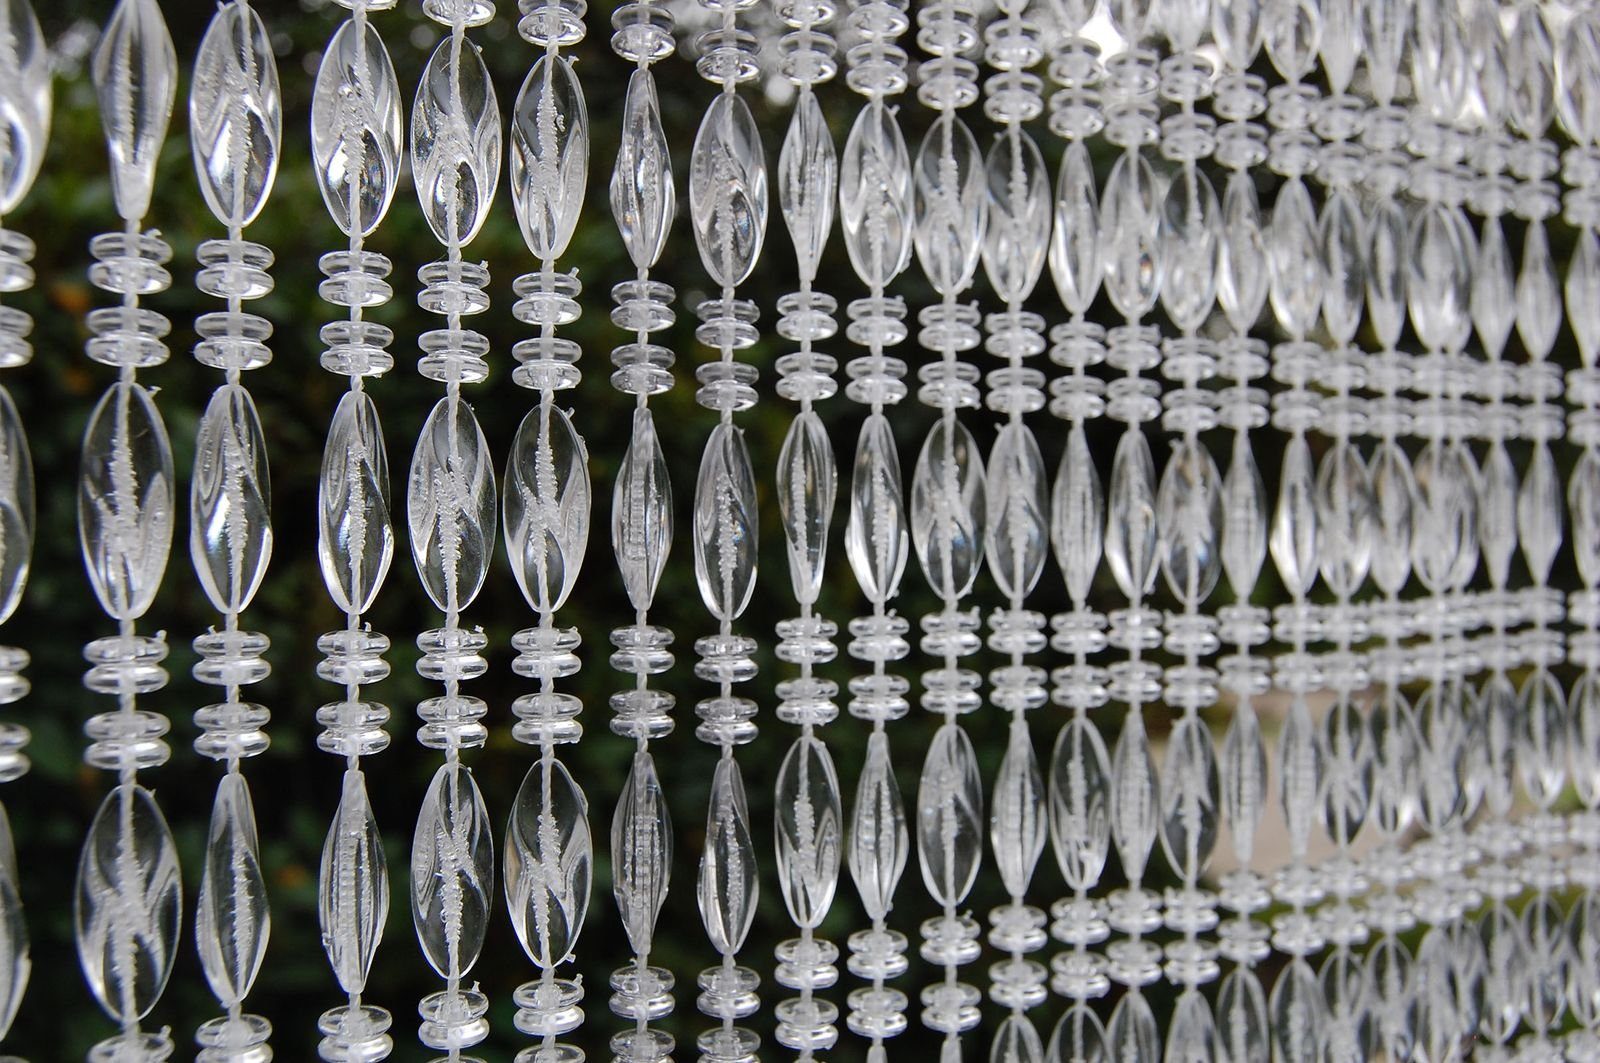 Türvorhang La Tenda ELBA 2 Perlenvorhang transparent, La Tenda, Hakenaufhängung, transparent, 90 x 210 cm, Polypropylen - Länge und Breite individuell kürzbar